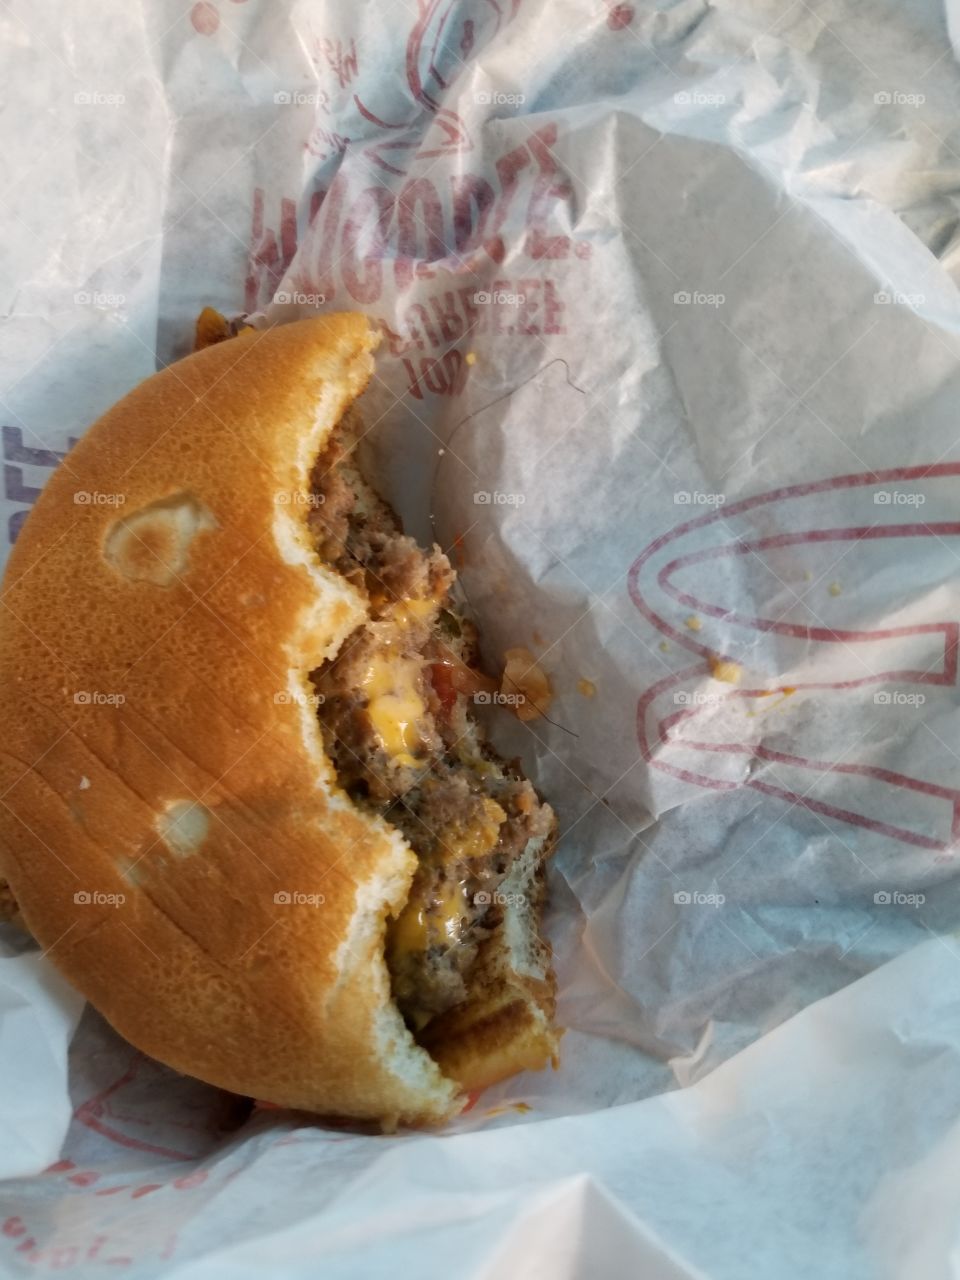 HAIR Cheeseburger, with bacon